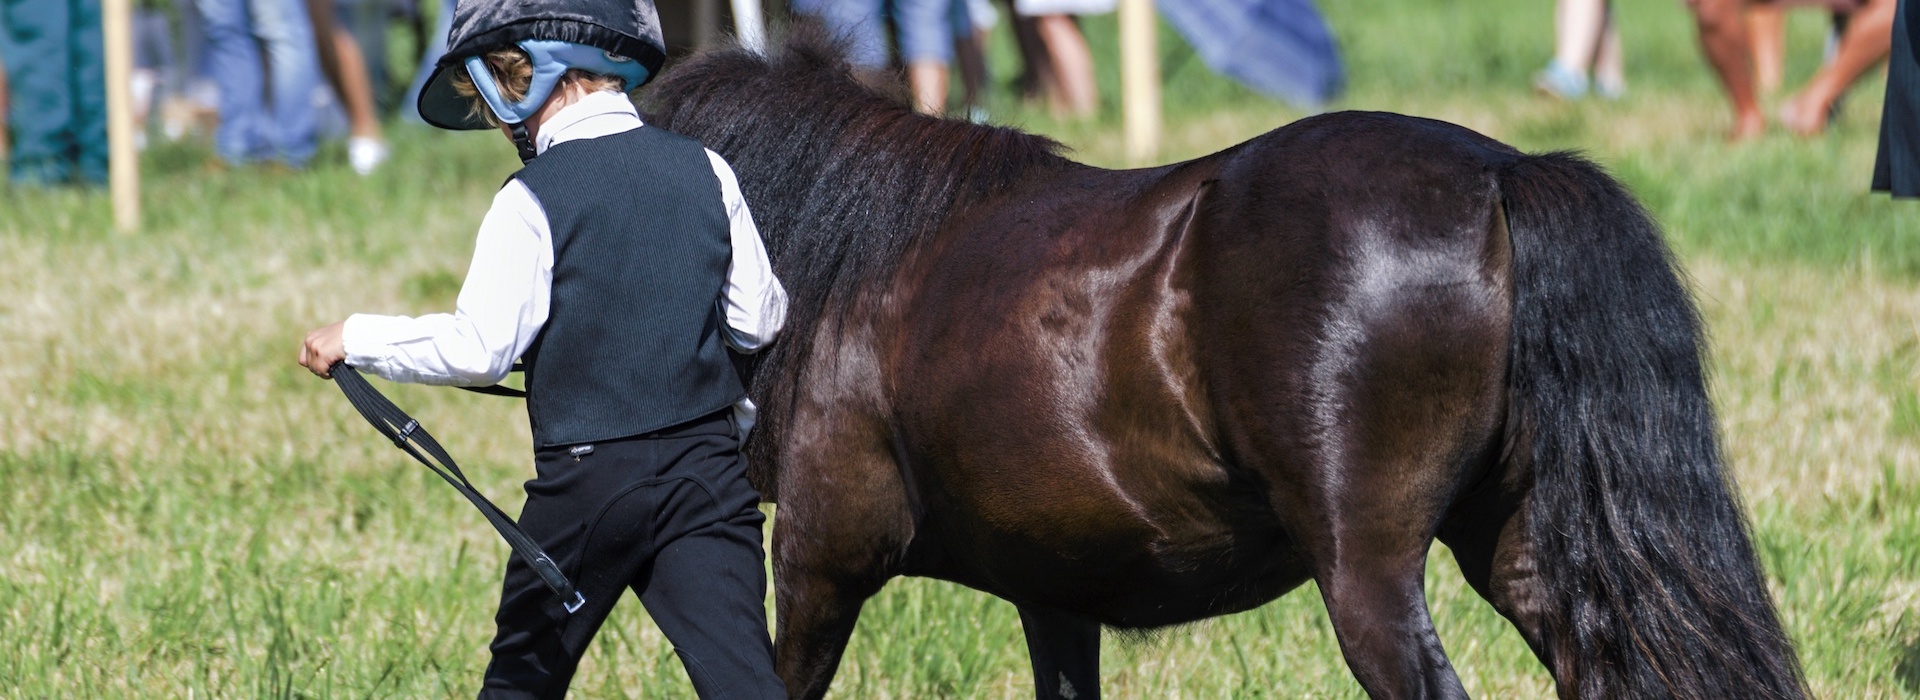 Ascot Equine Veterinarians, Ascot Equine vet, Performance horse, Racehorse